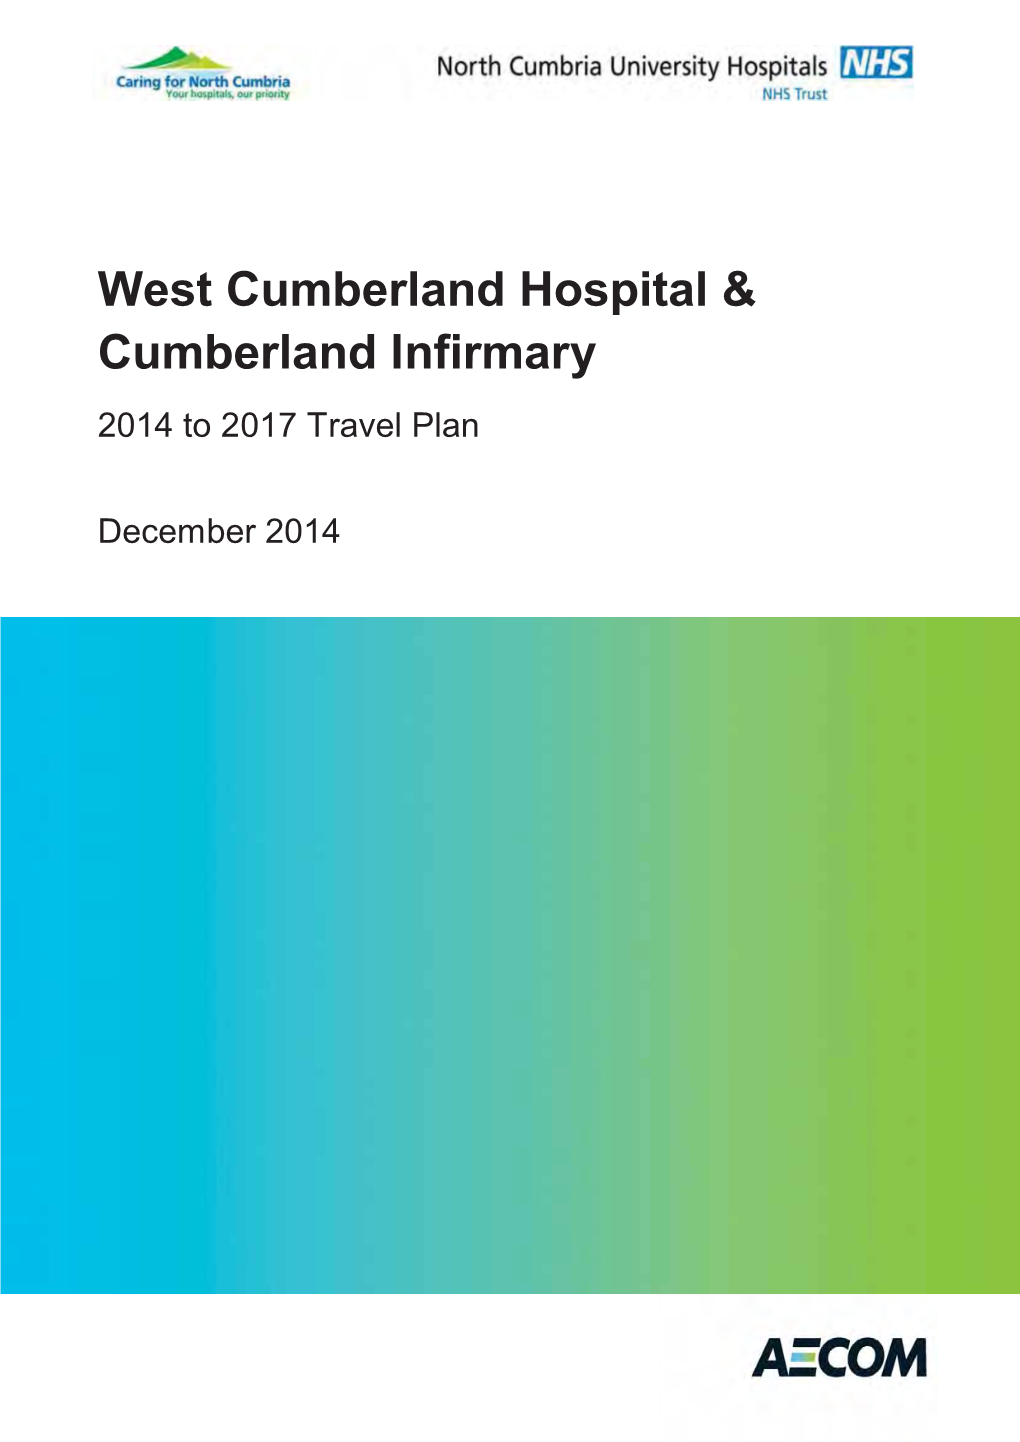 West Cumberland Hospital & Cumberland Infirmary